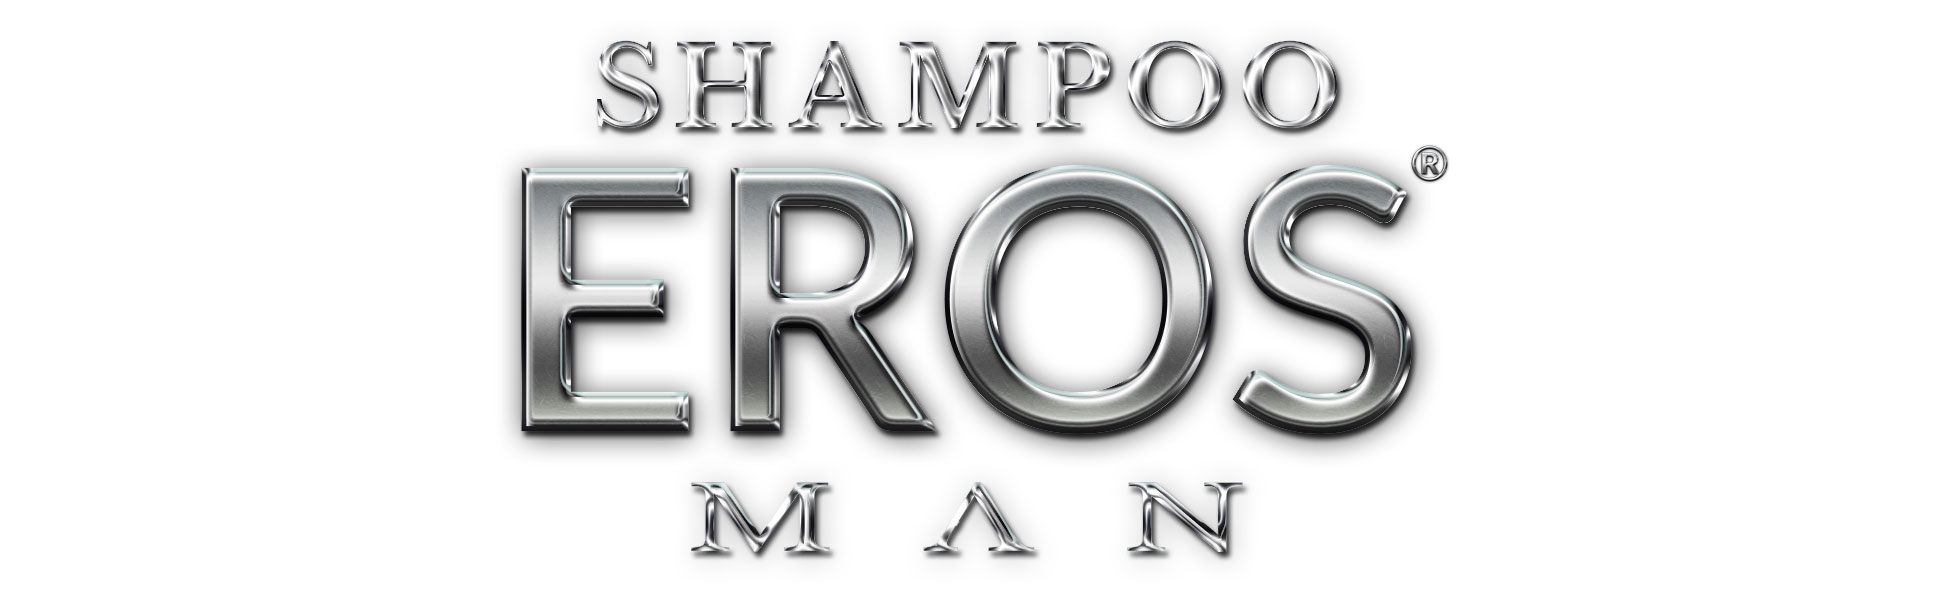 Buscamos distribuidores de Shampoo Eros Man